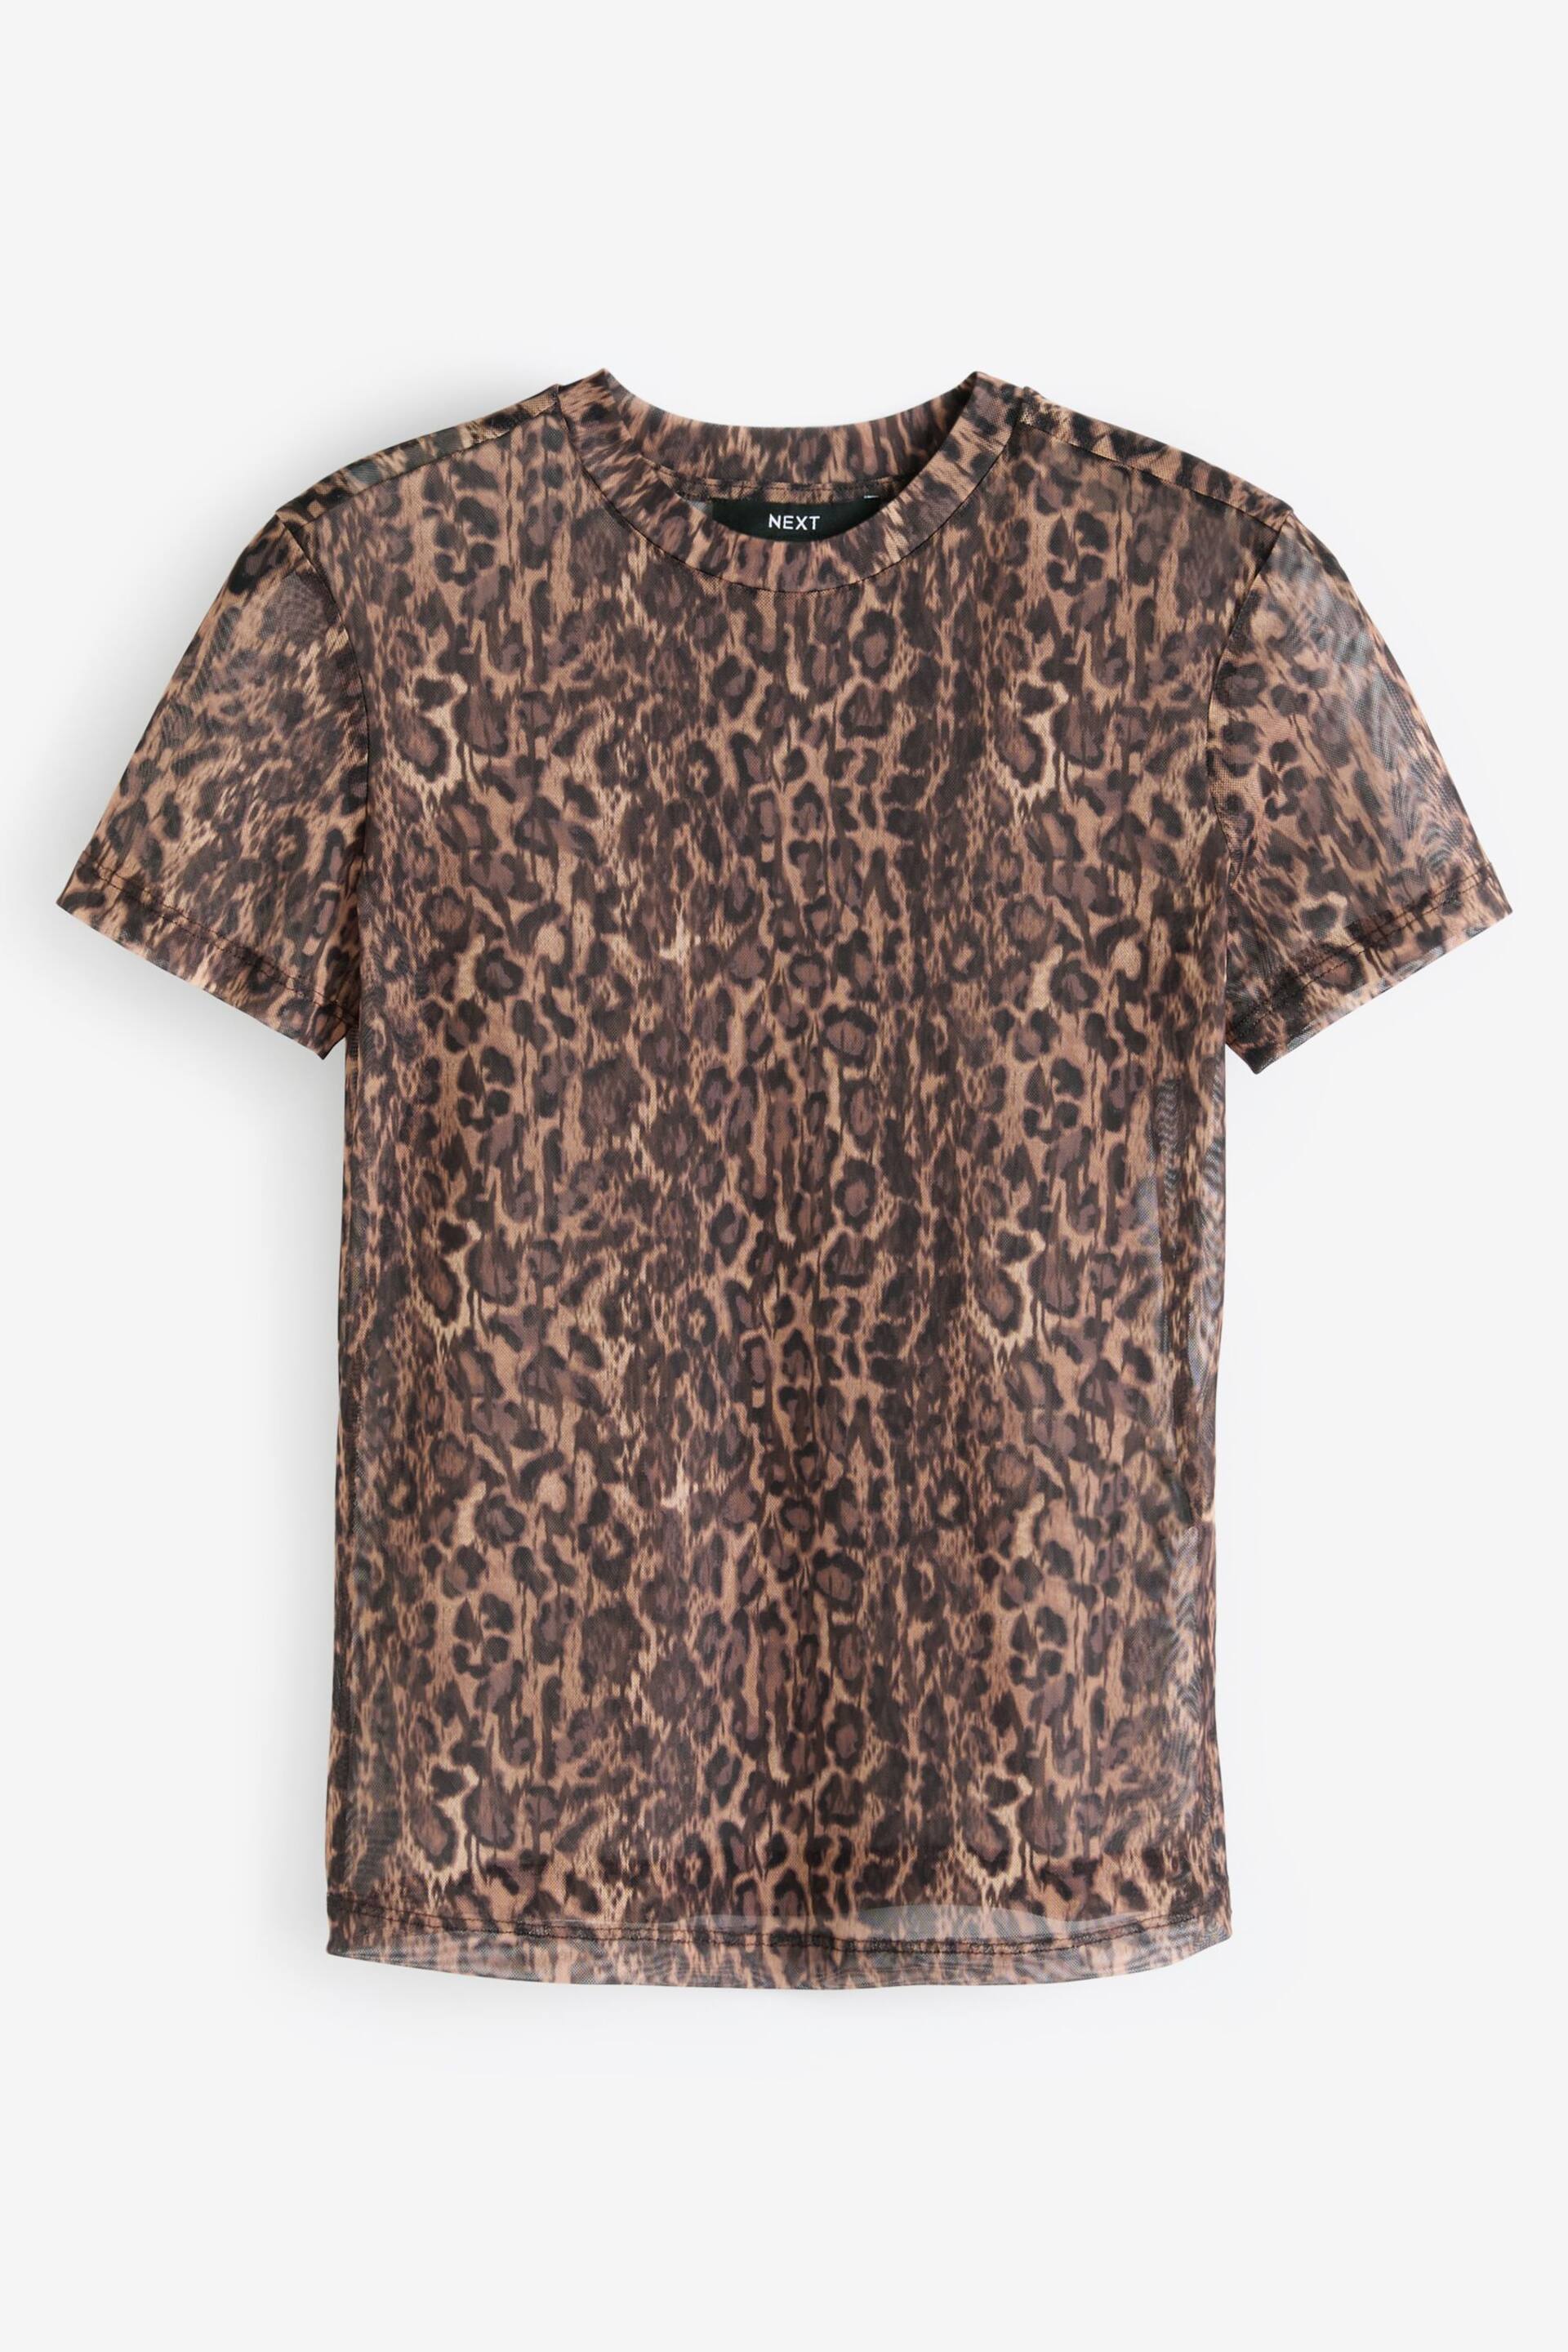 Leopard Animal Short Sleeve Mesh Top - Image 5 of 6